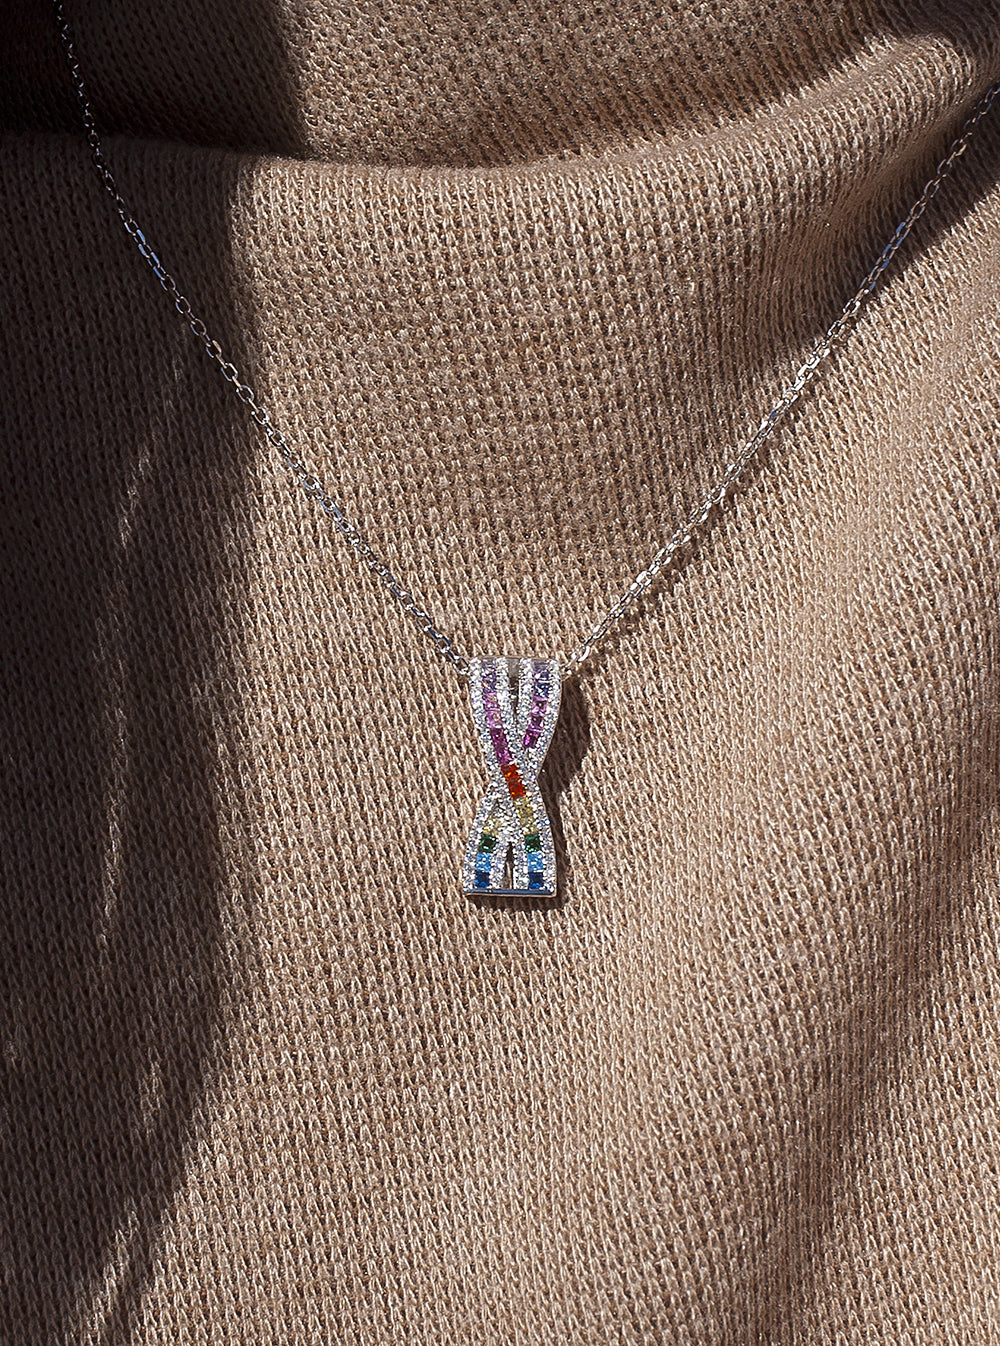 Necklaces with stones design multicolored crossed rails